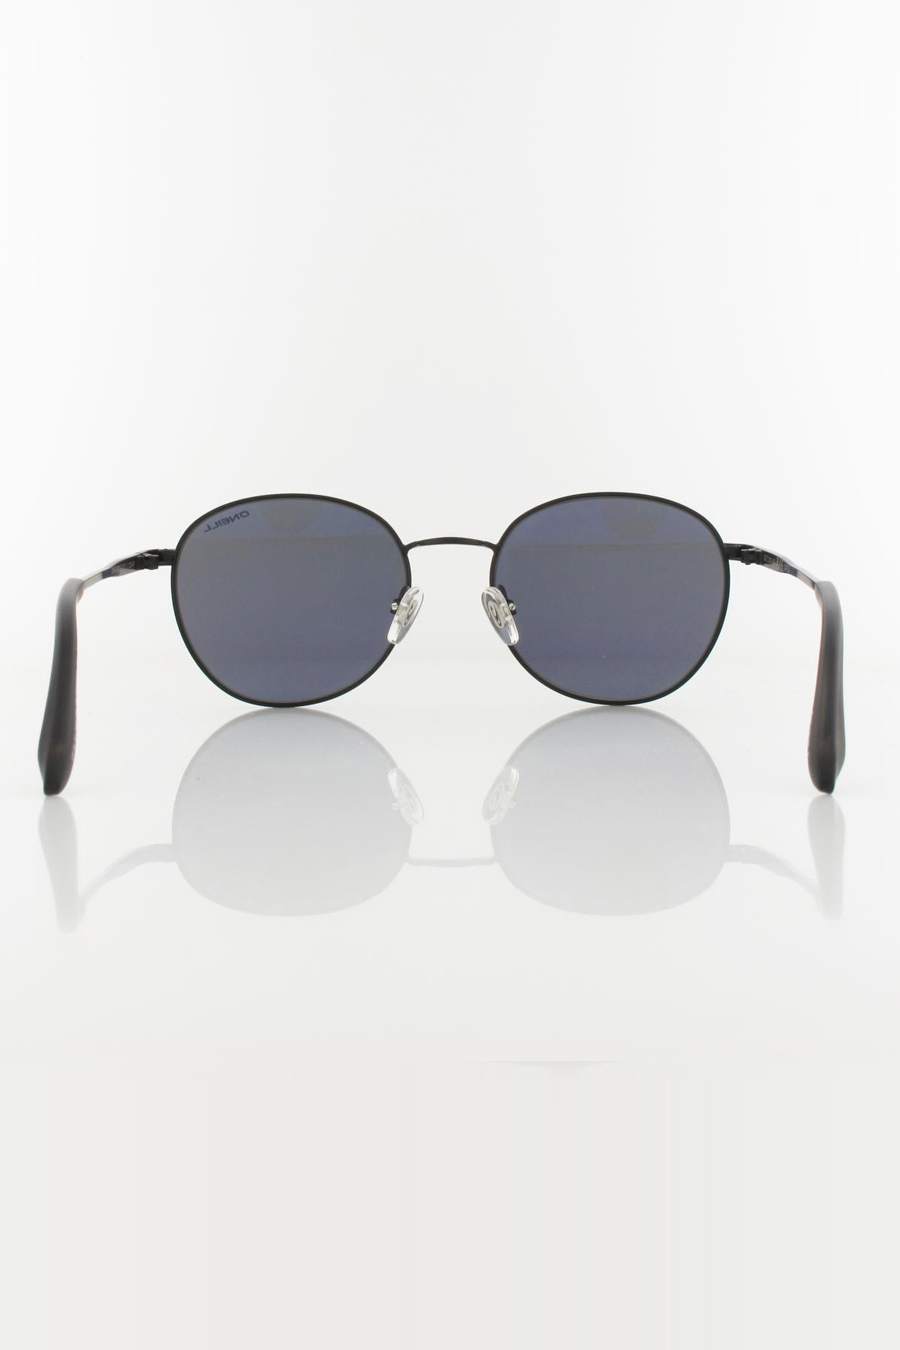 Sunglasses ONEILL ONS-9013-20-004P